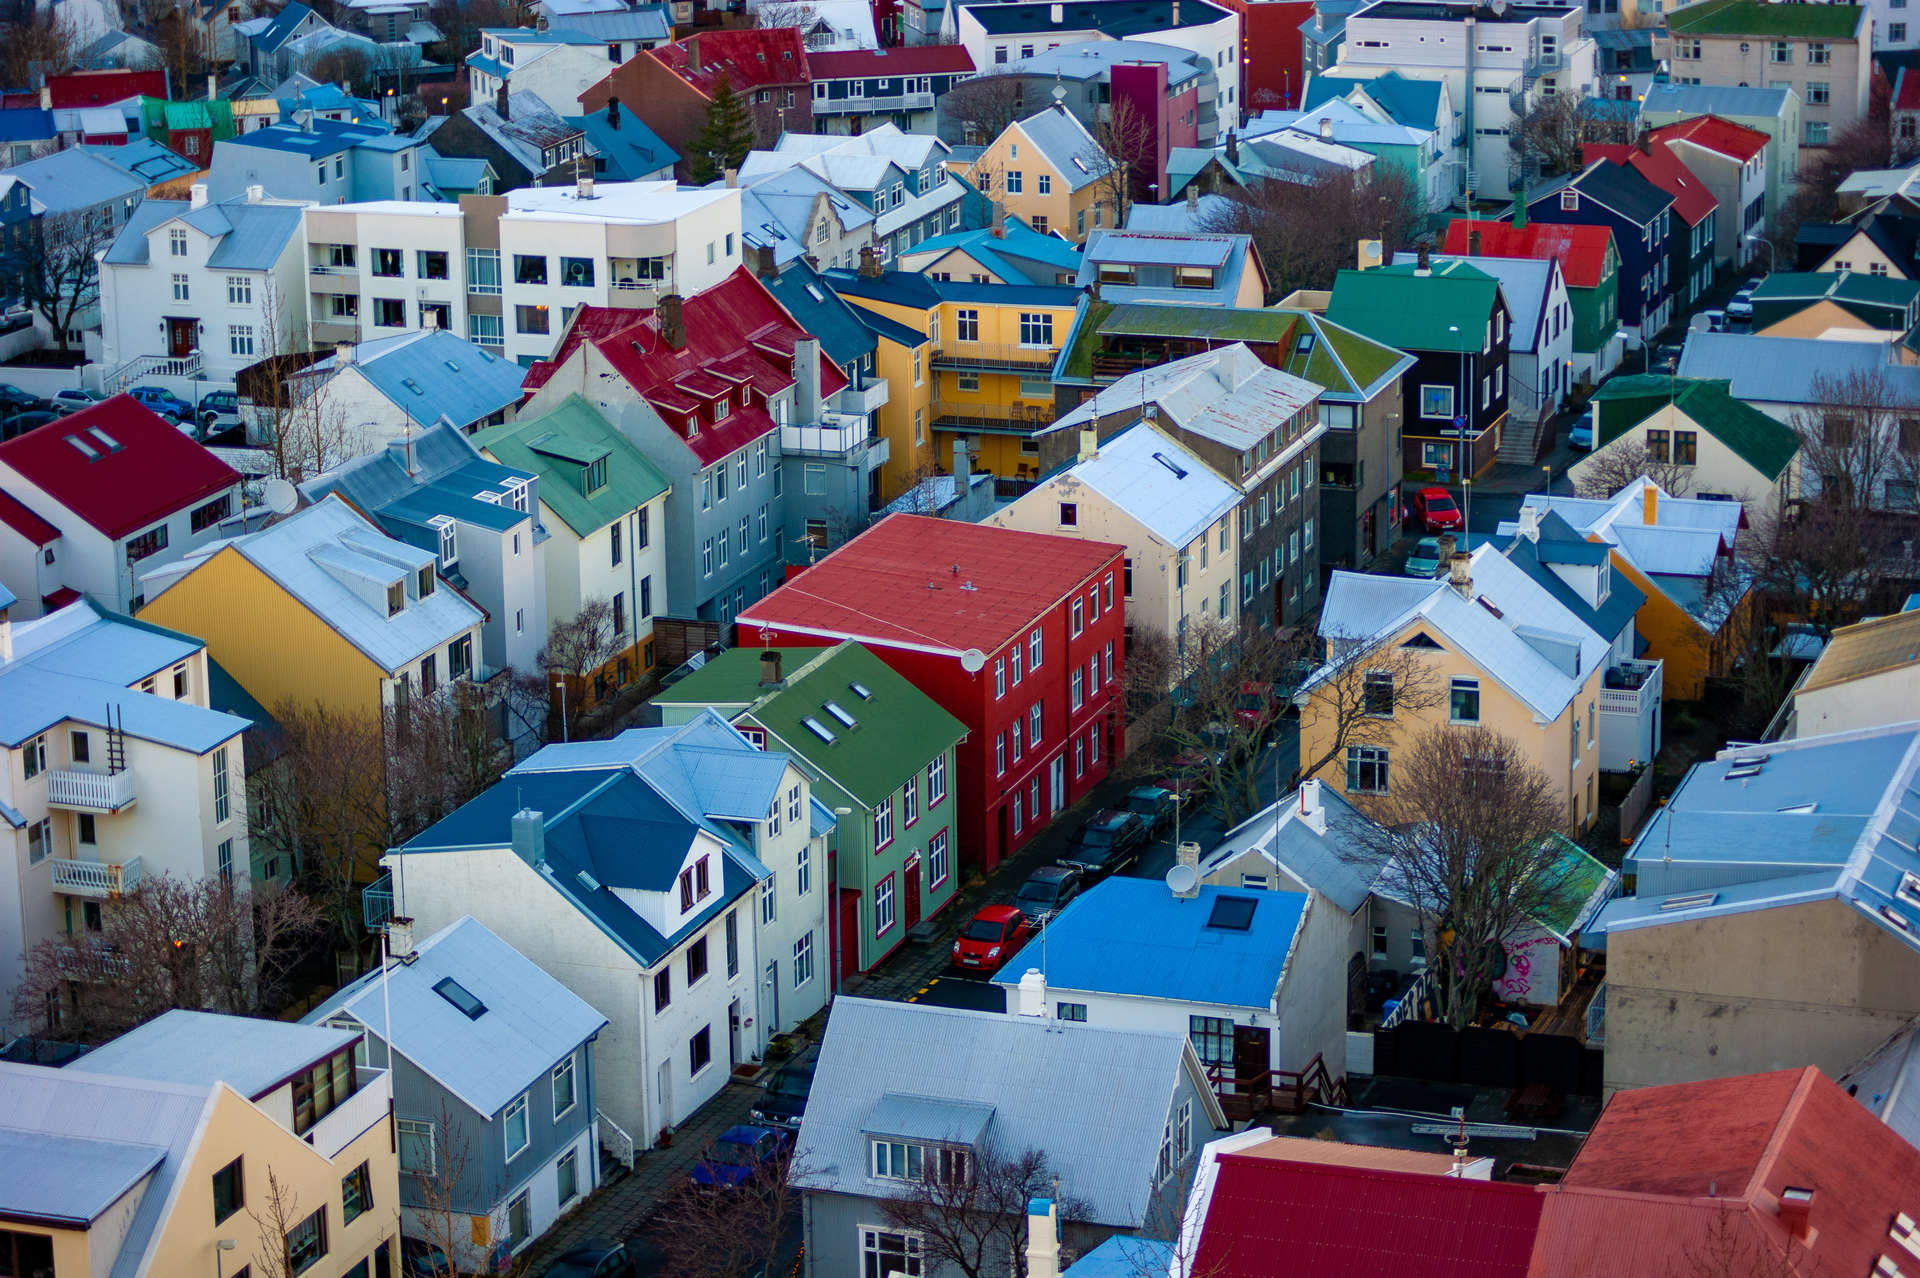 Reykjavik's suburbs